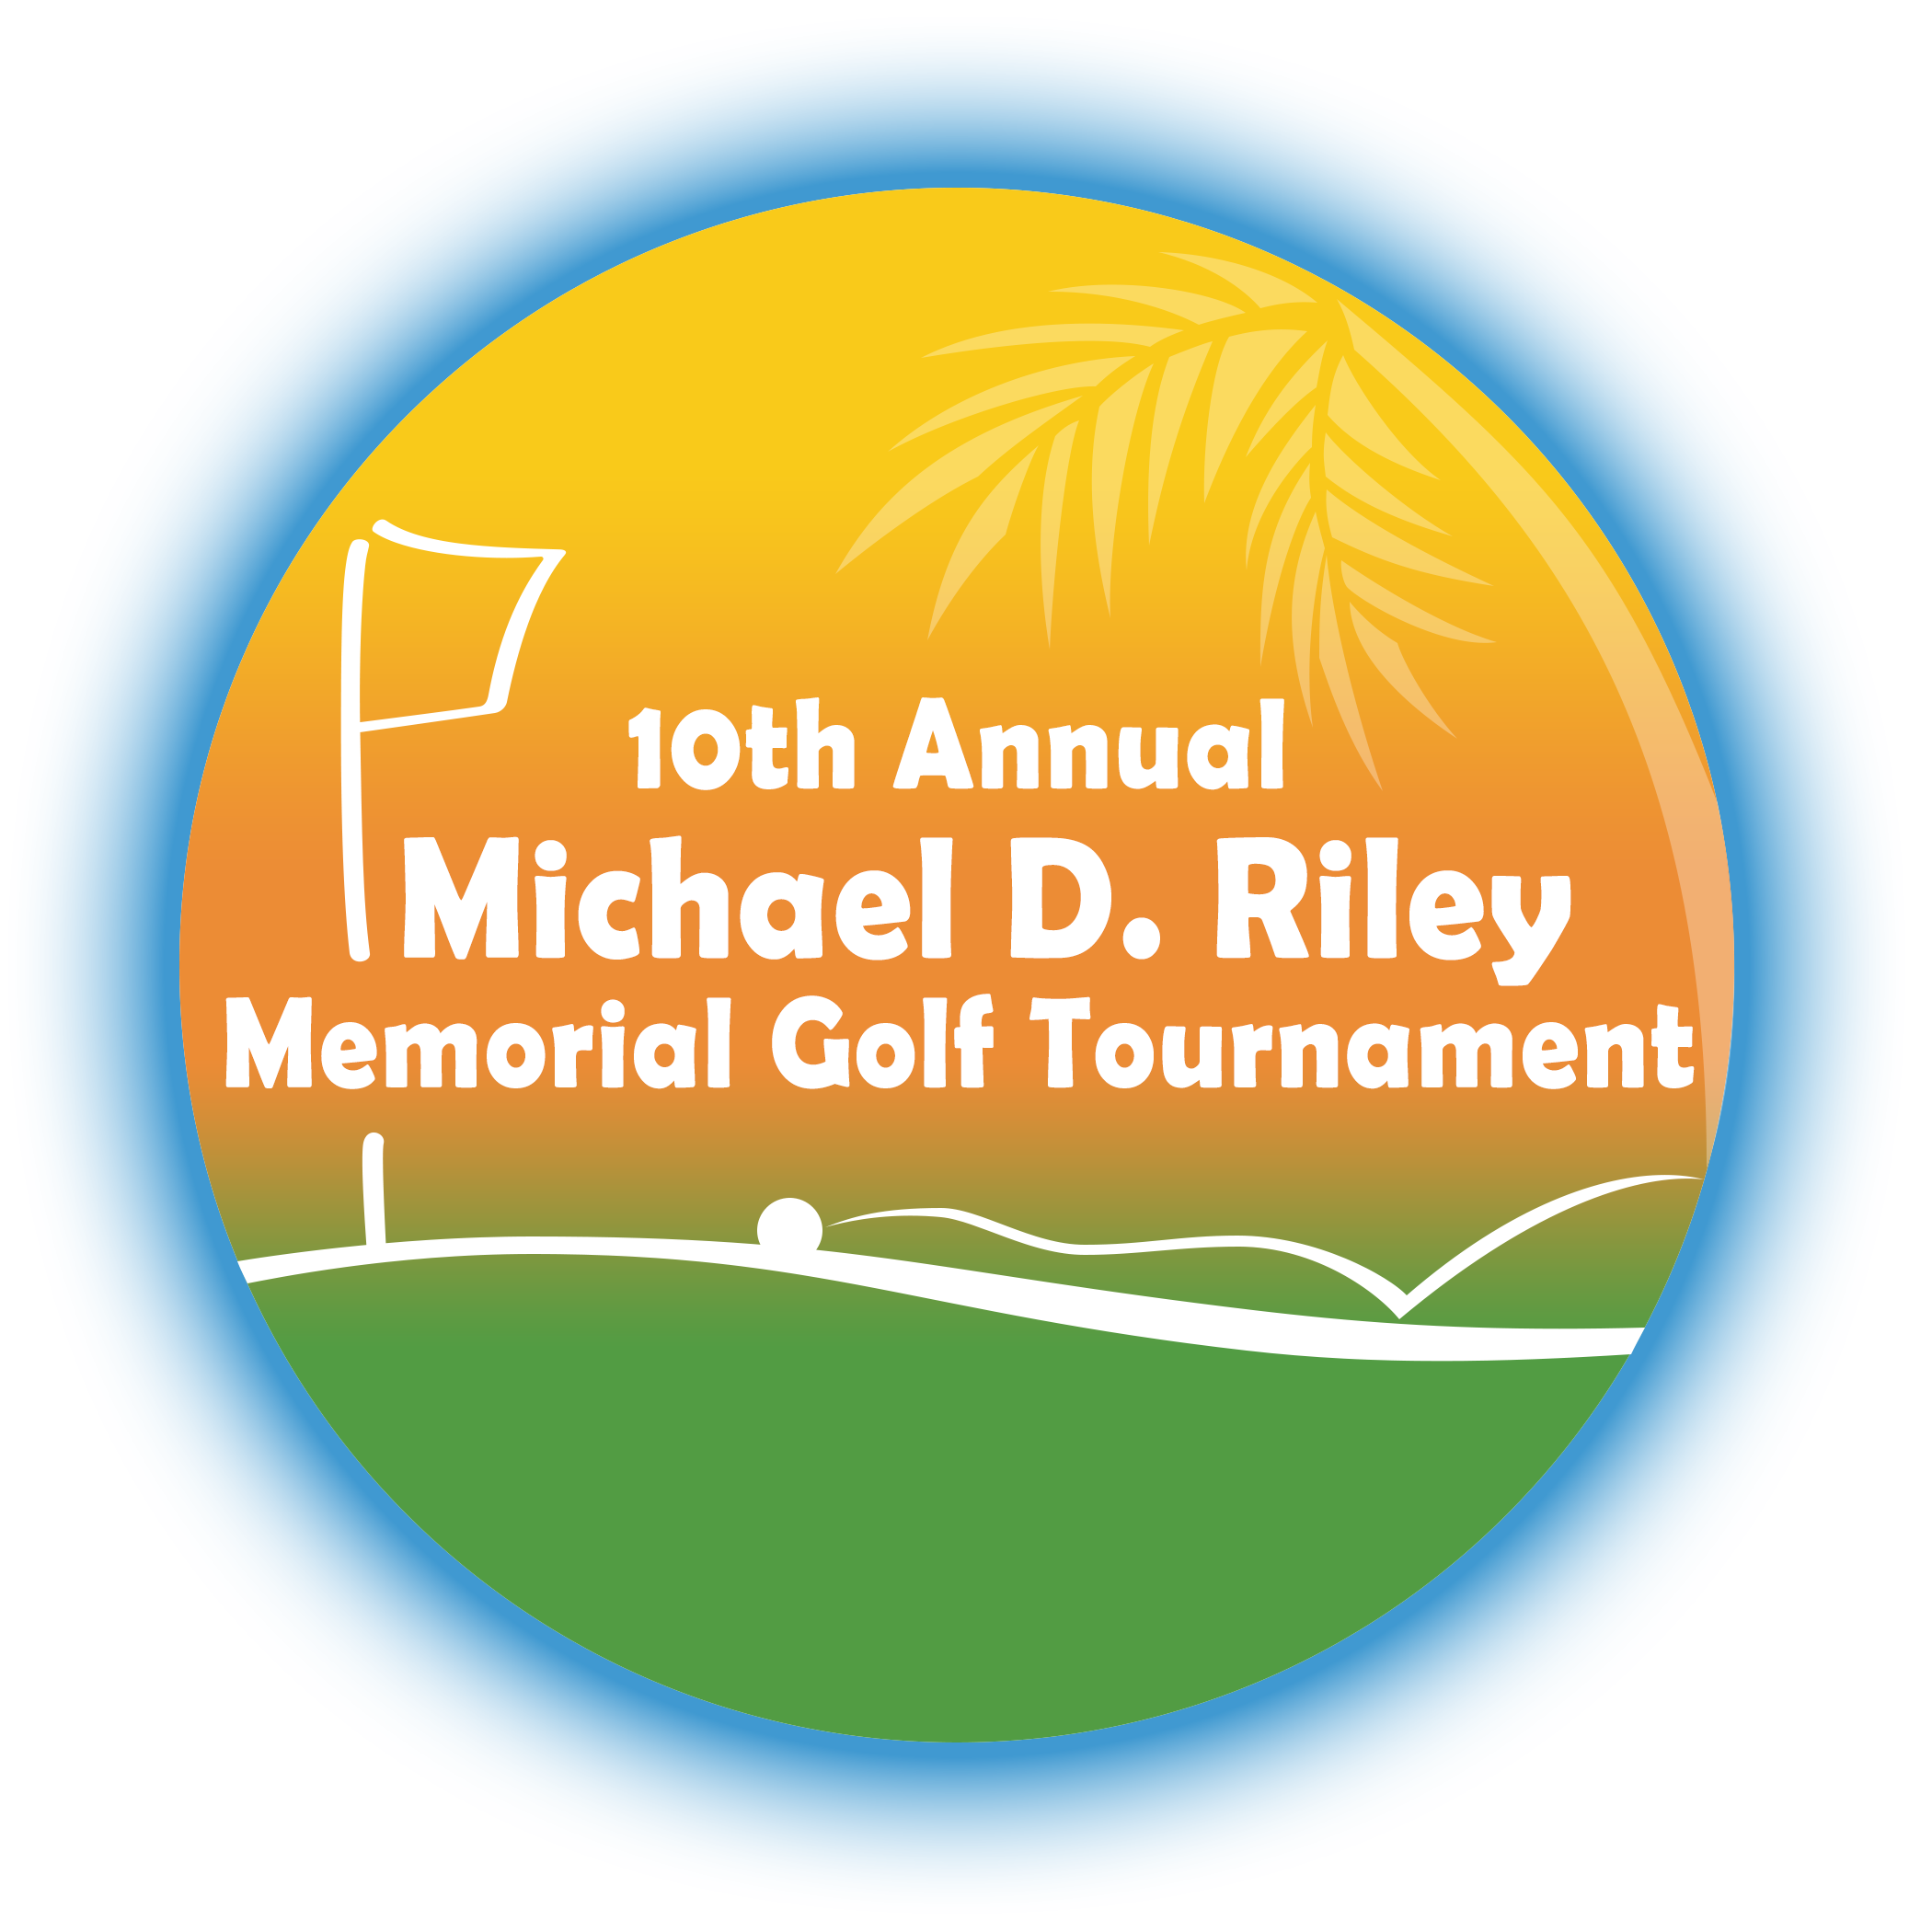 Michael D. Riley Memorial Golf Tournament